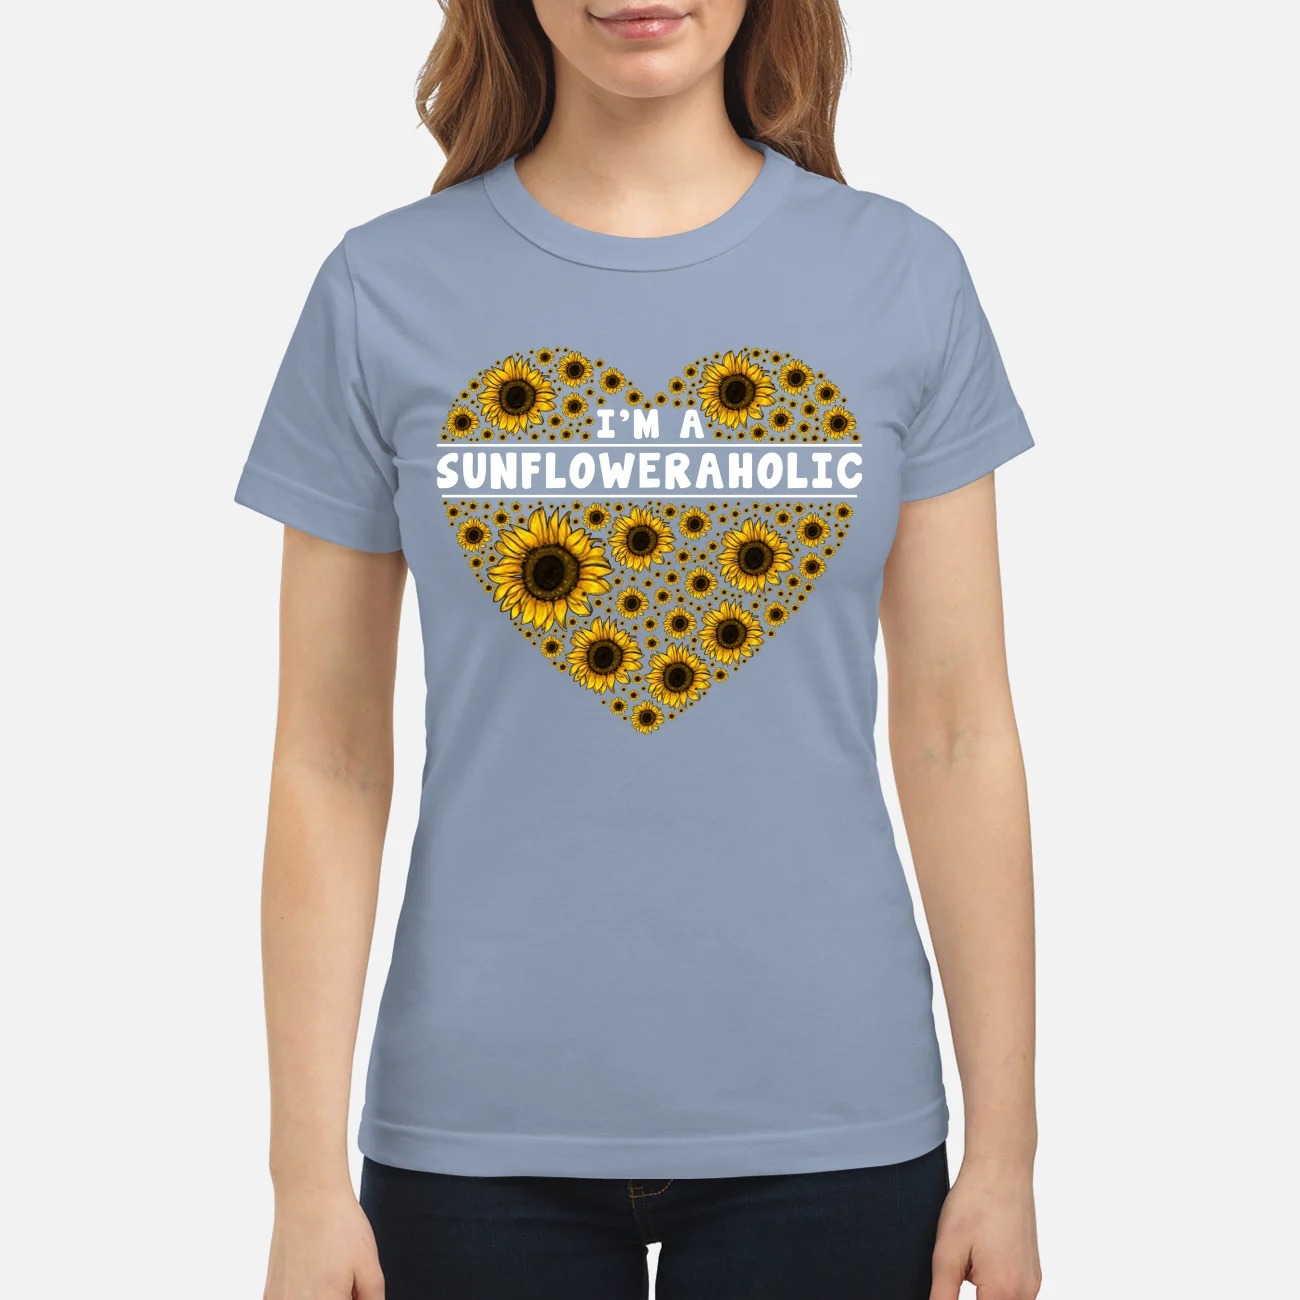 I'm a sunfloweraholic shirt